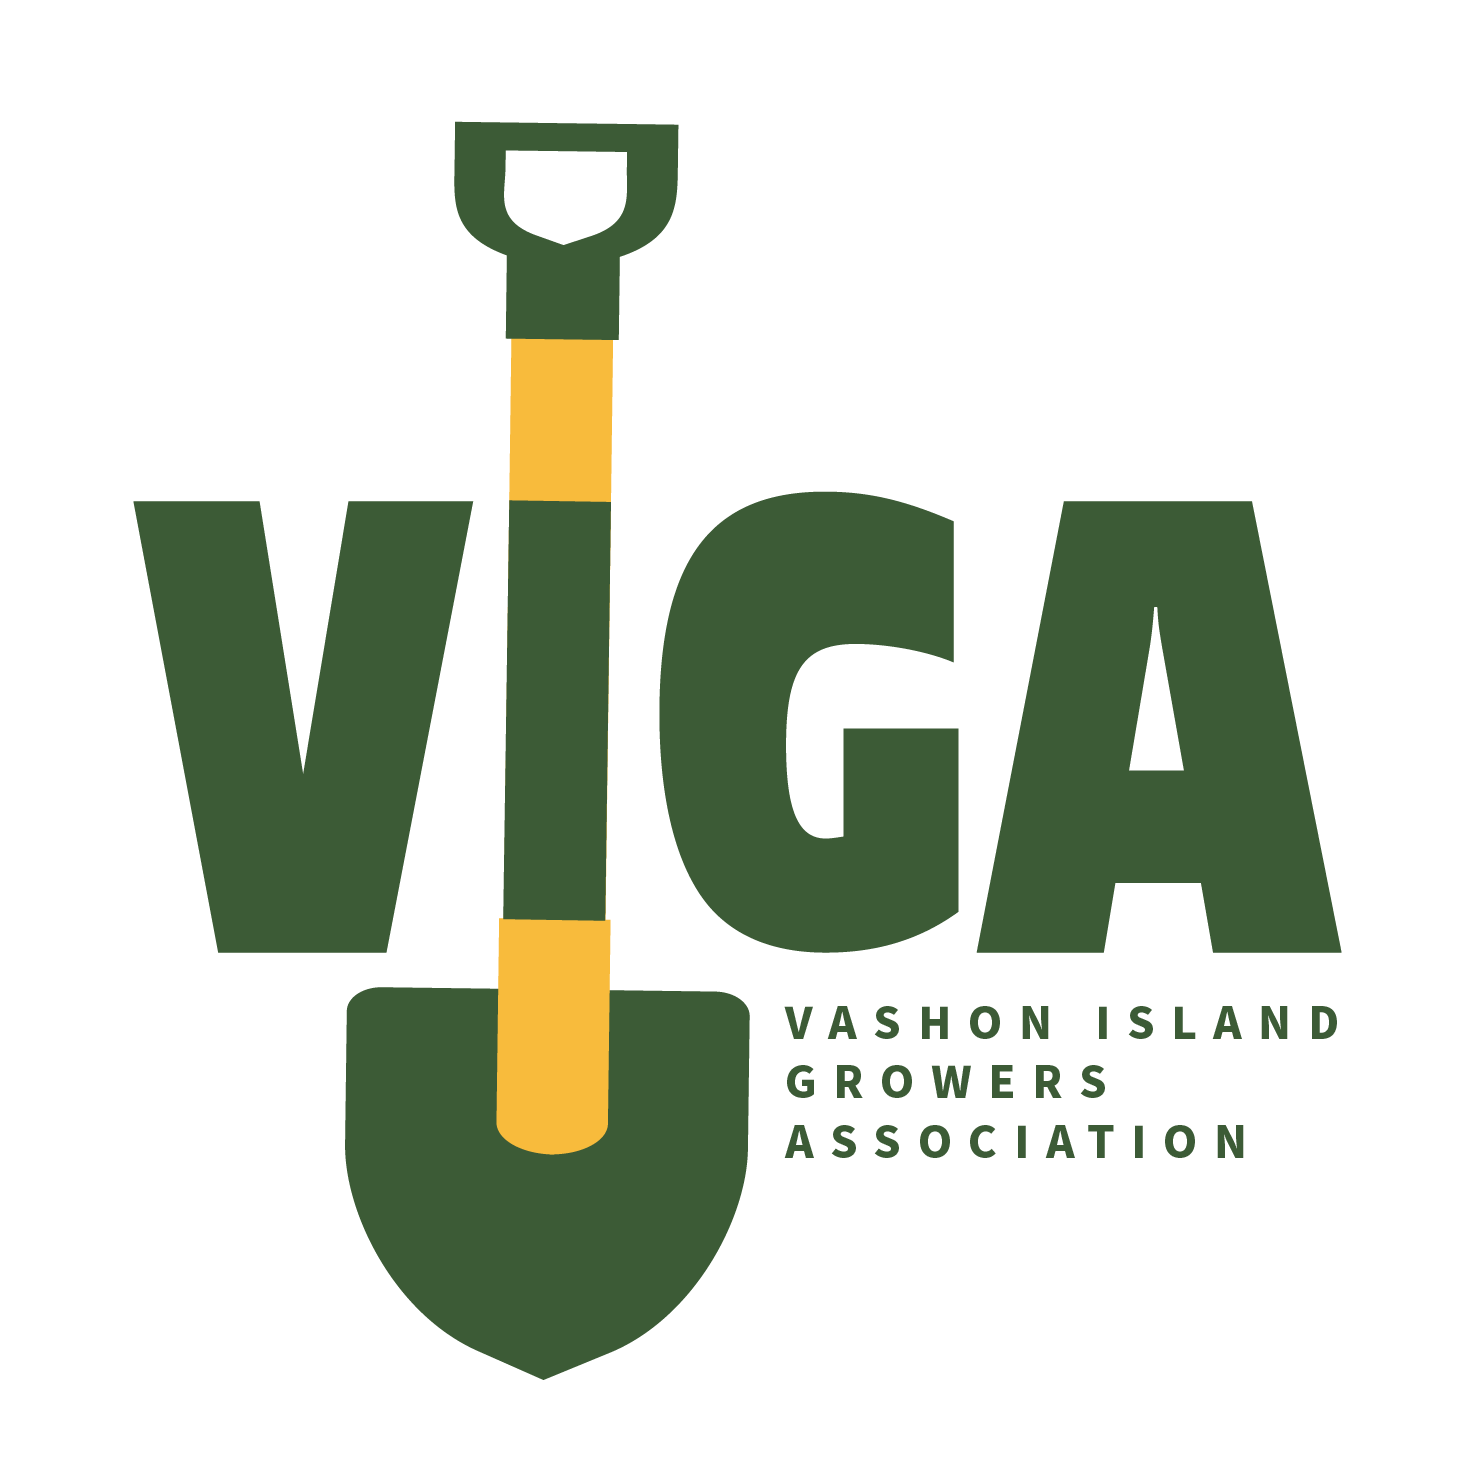 Vashon Island Growers Association 